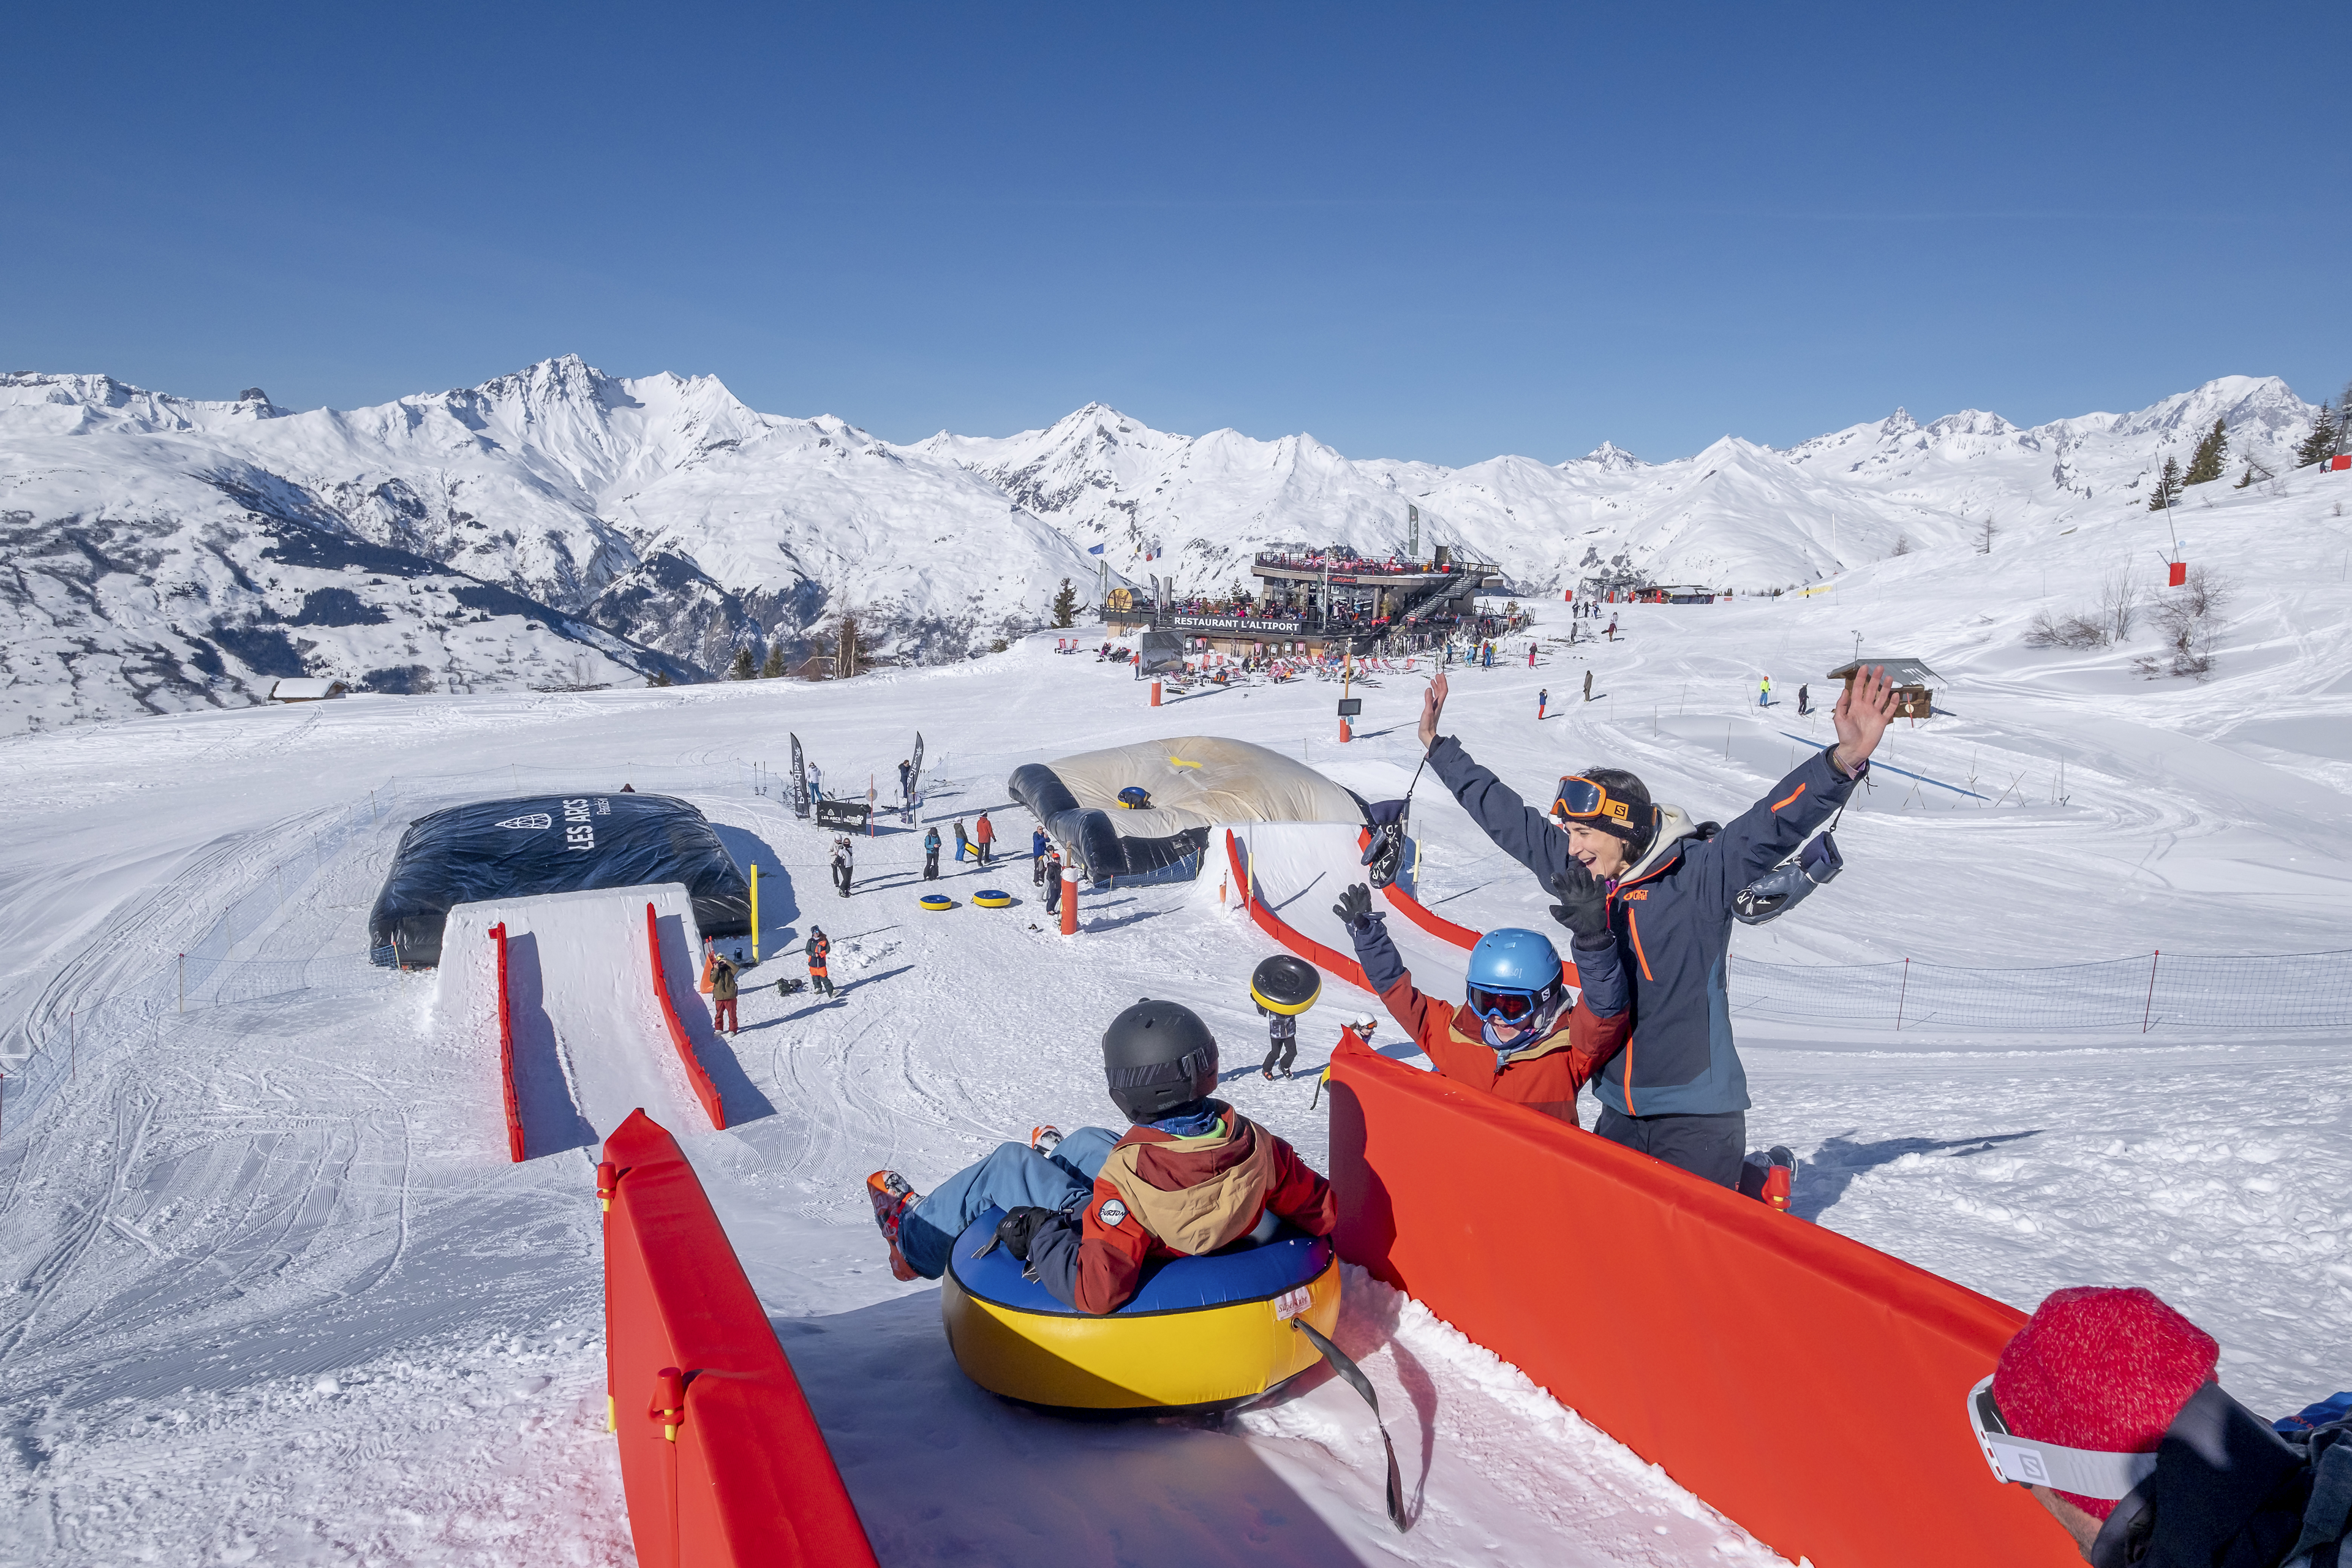 Children having great fun snow tubing down slide in Les Arcs